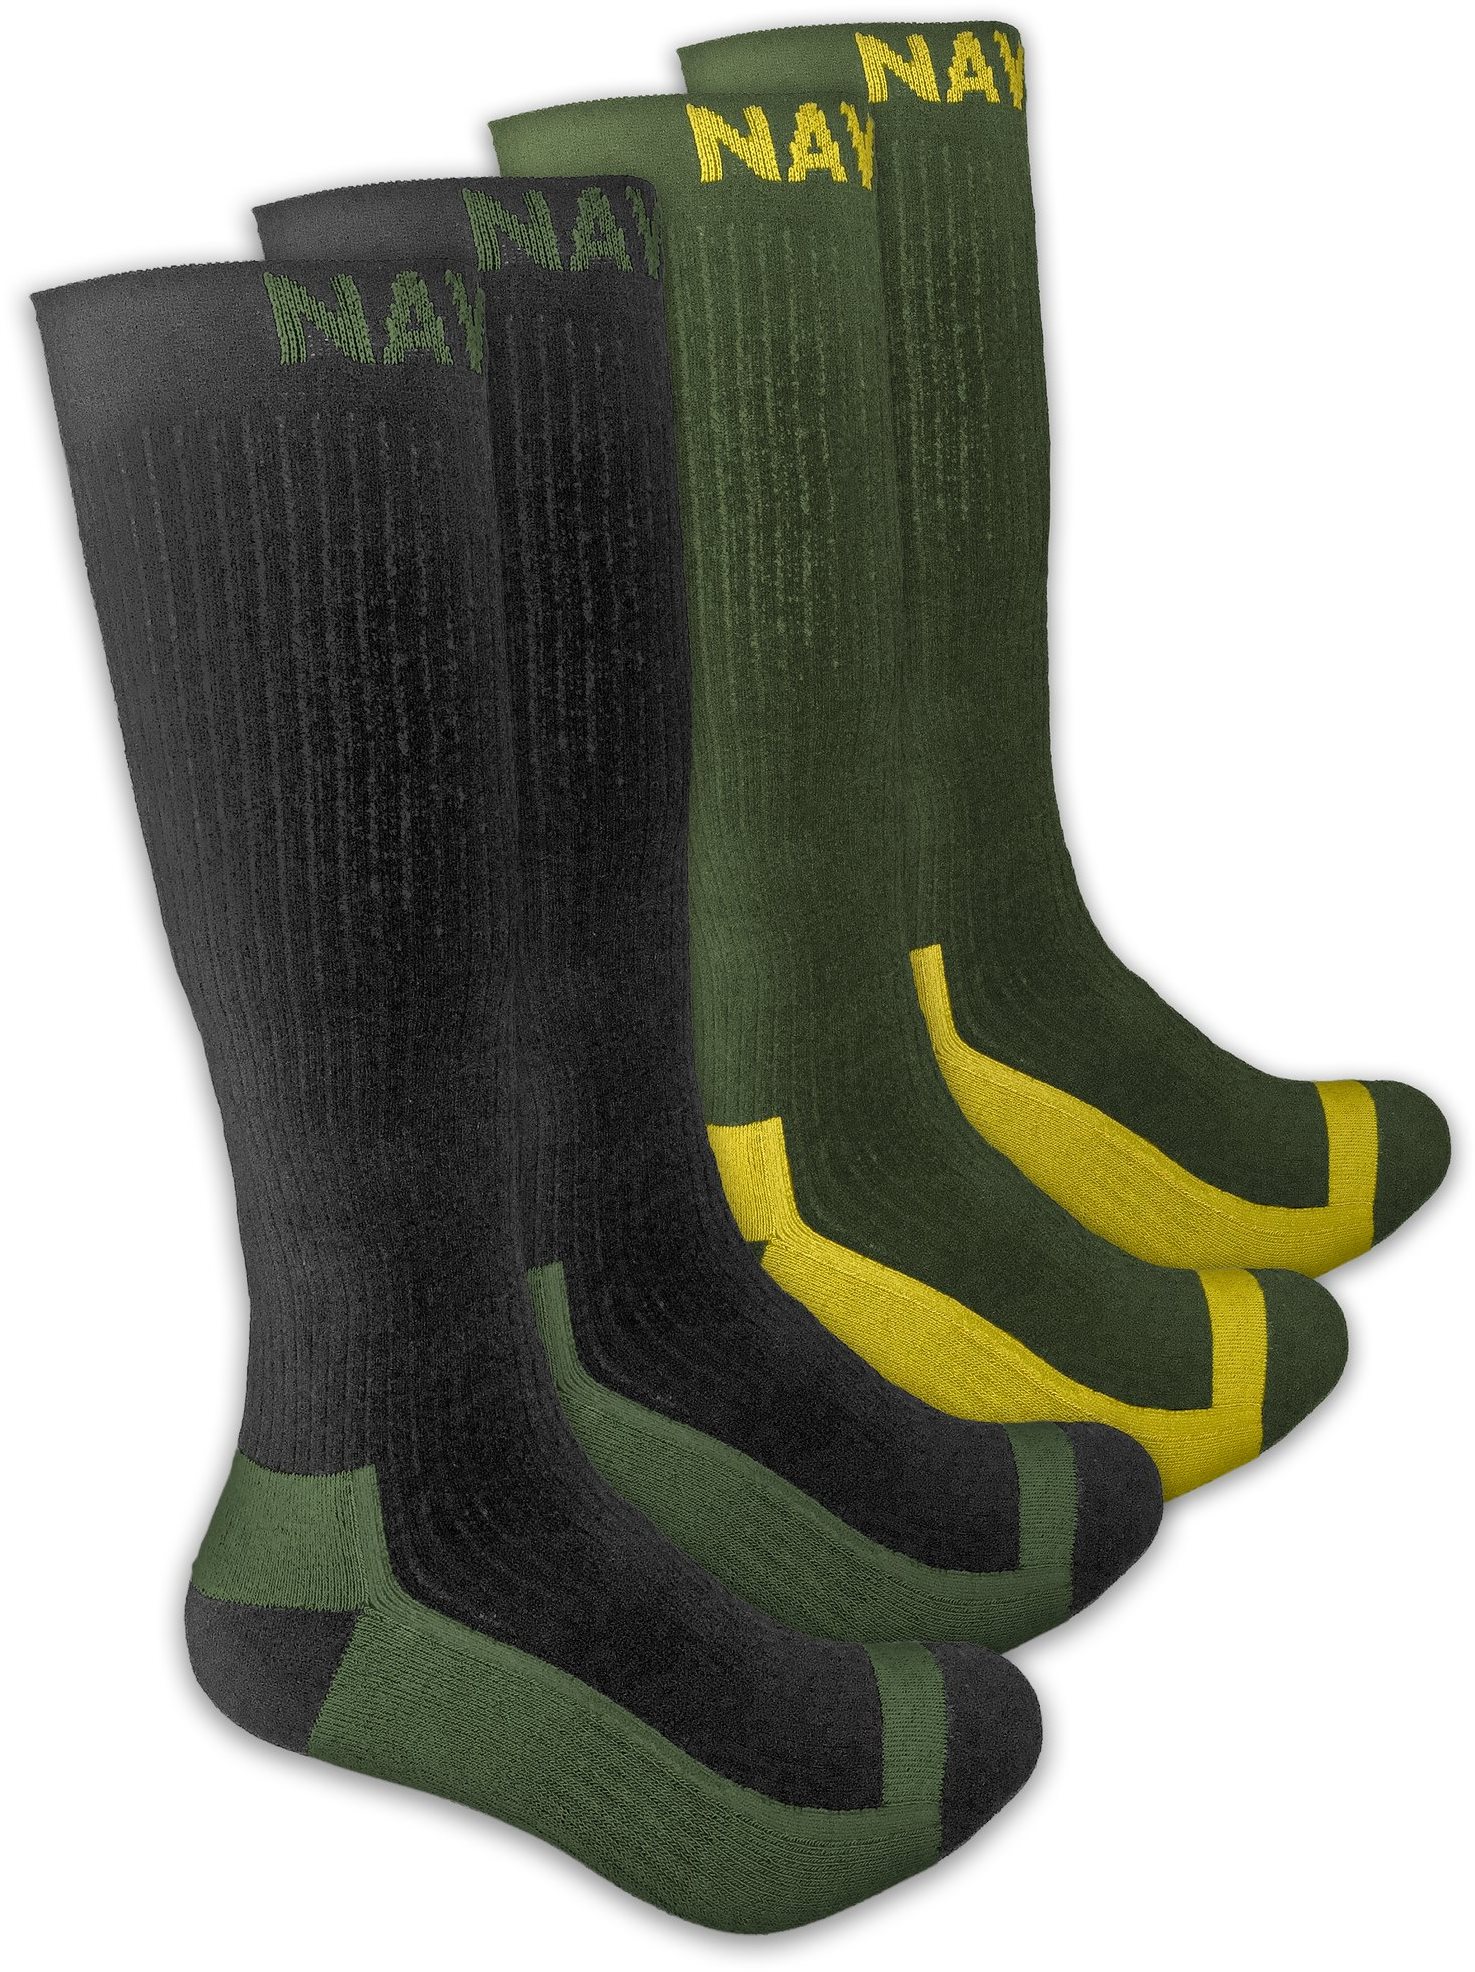 Zokni Navitas Coolmax Boot Sock Twin Pack méret 41-45